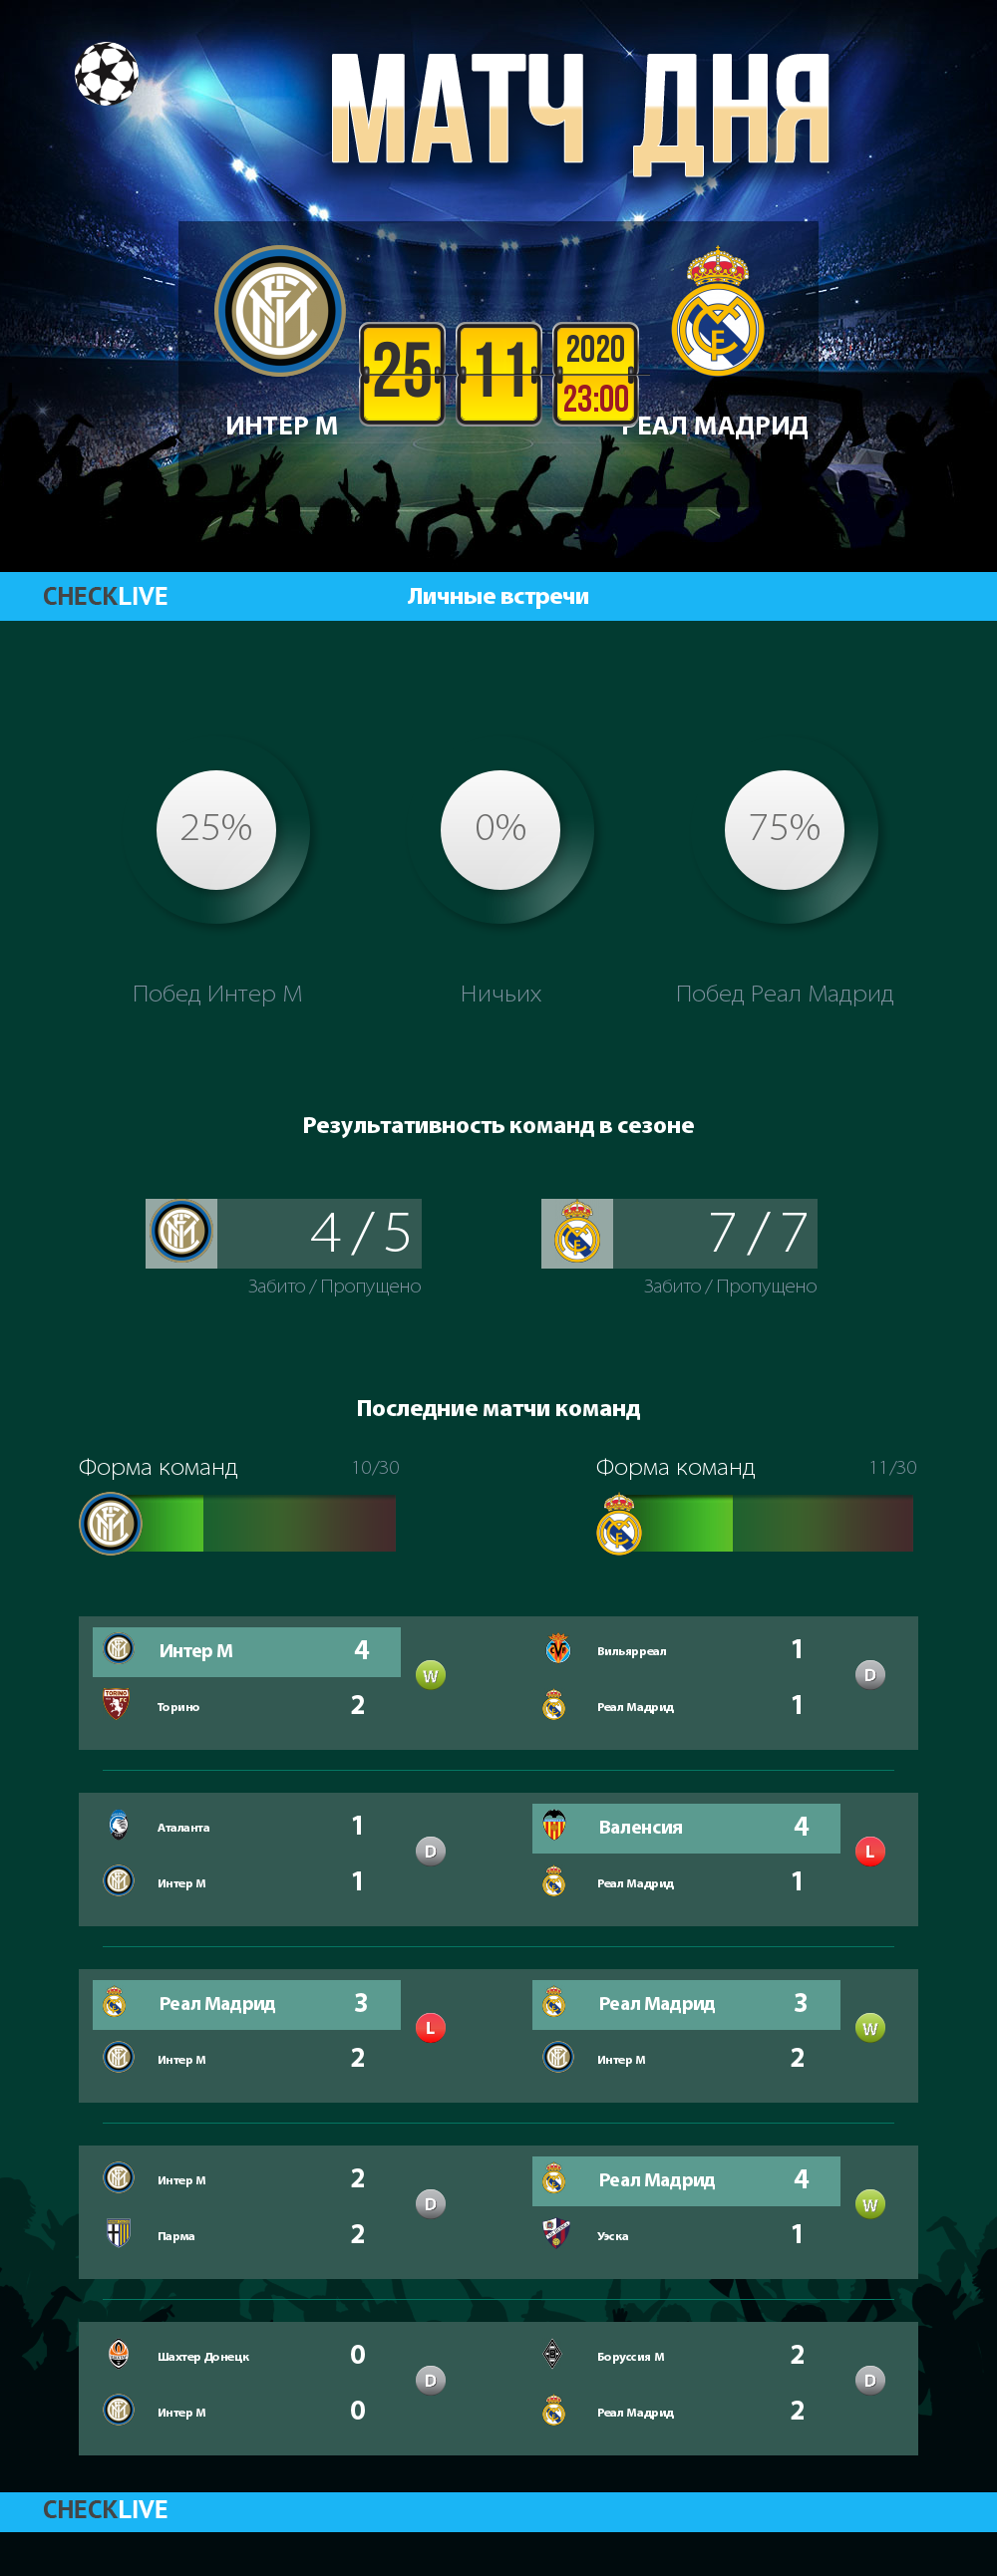 Инфографика Интер М и Реал Мадрид матч дня 25.11.2020